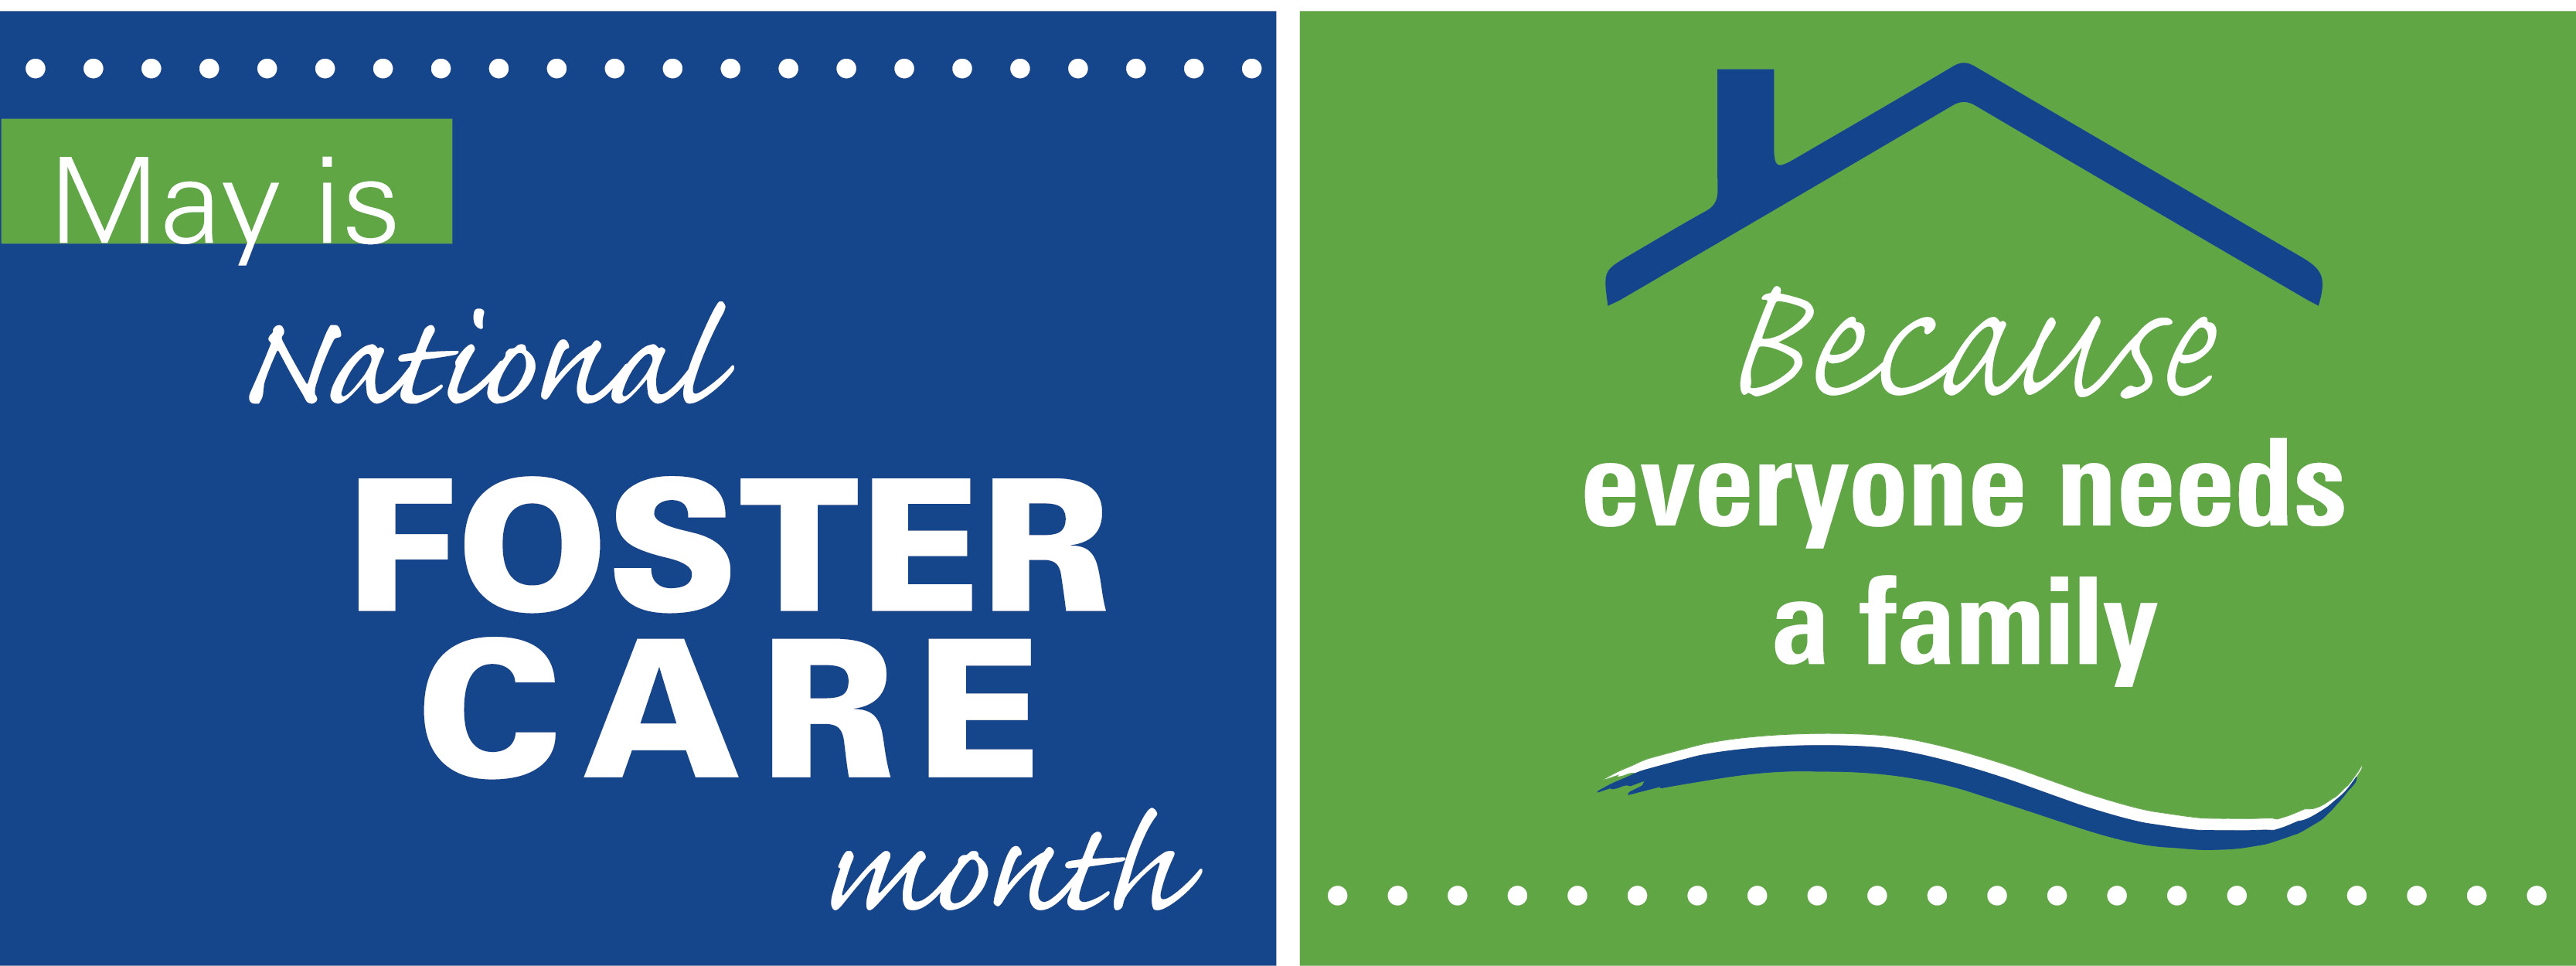 Foster Care Awareness Month Slider 2021 April FINAL 3